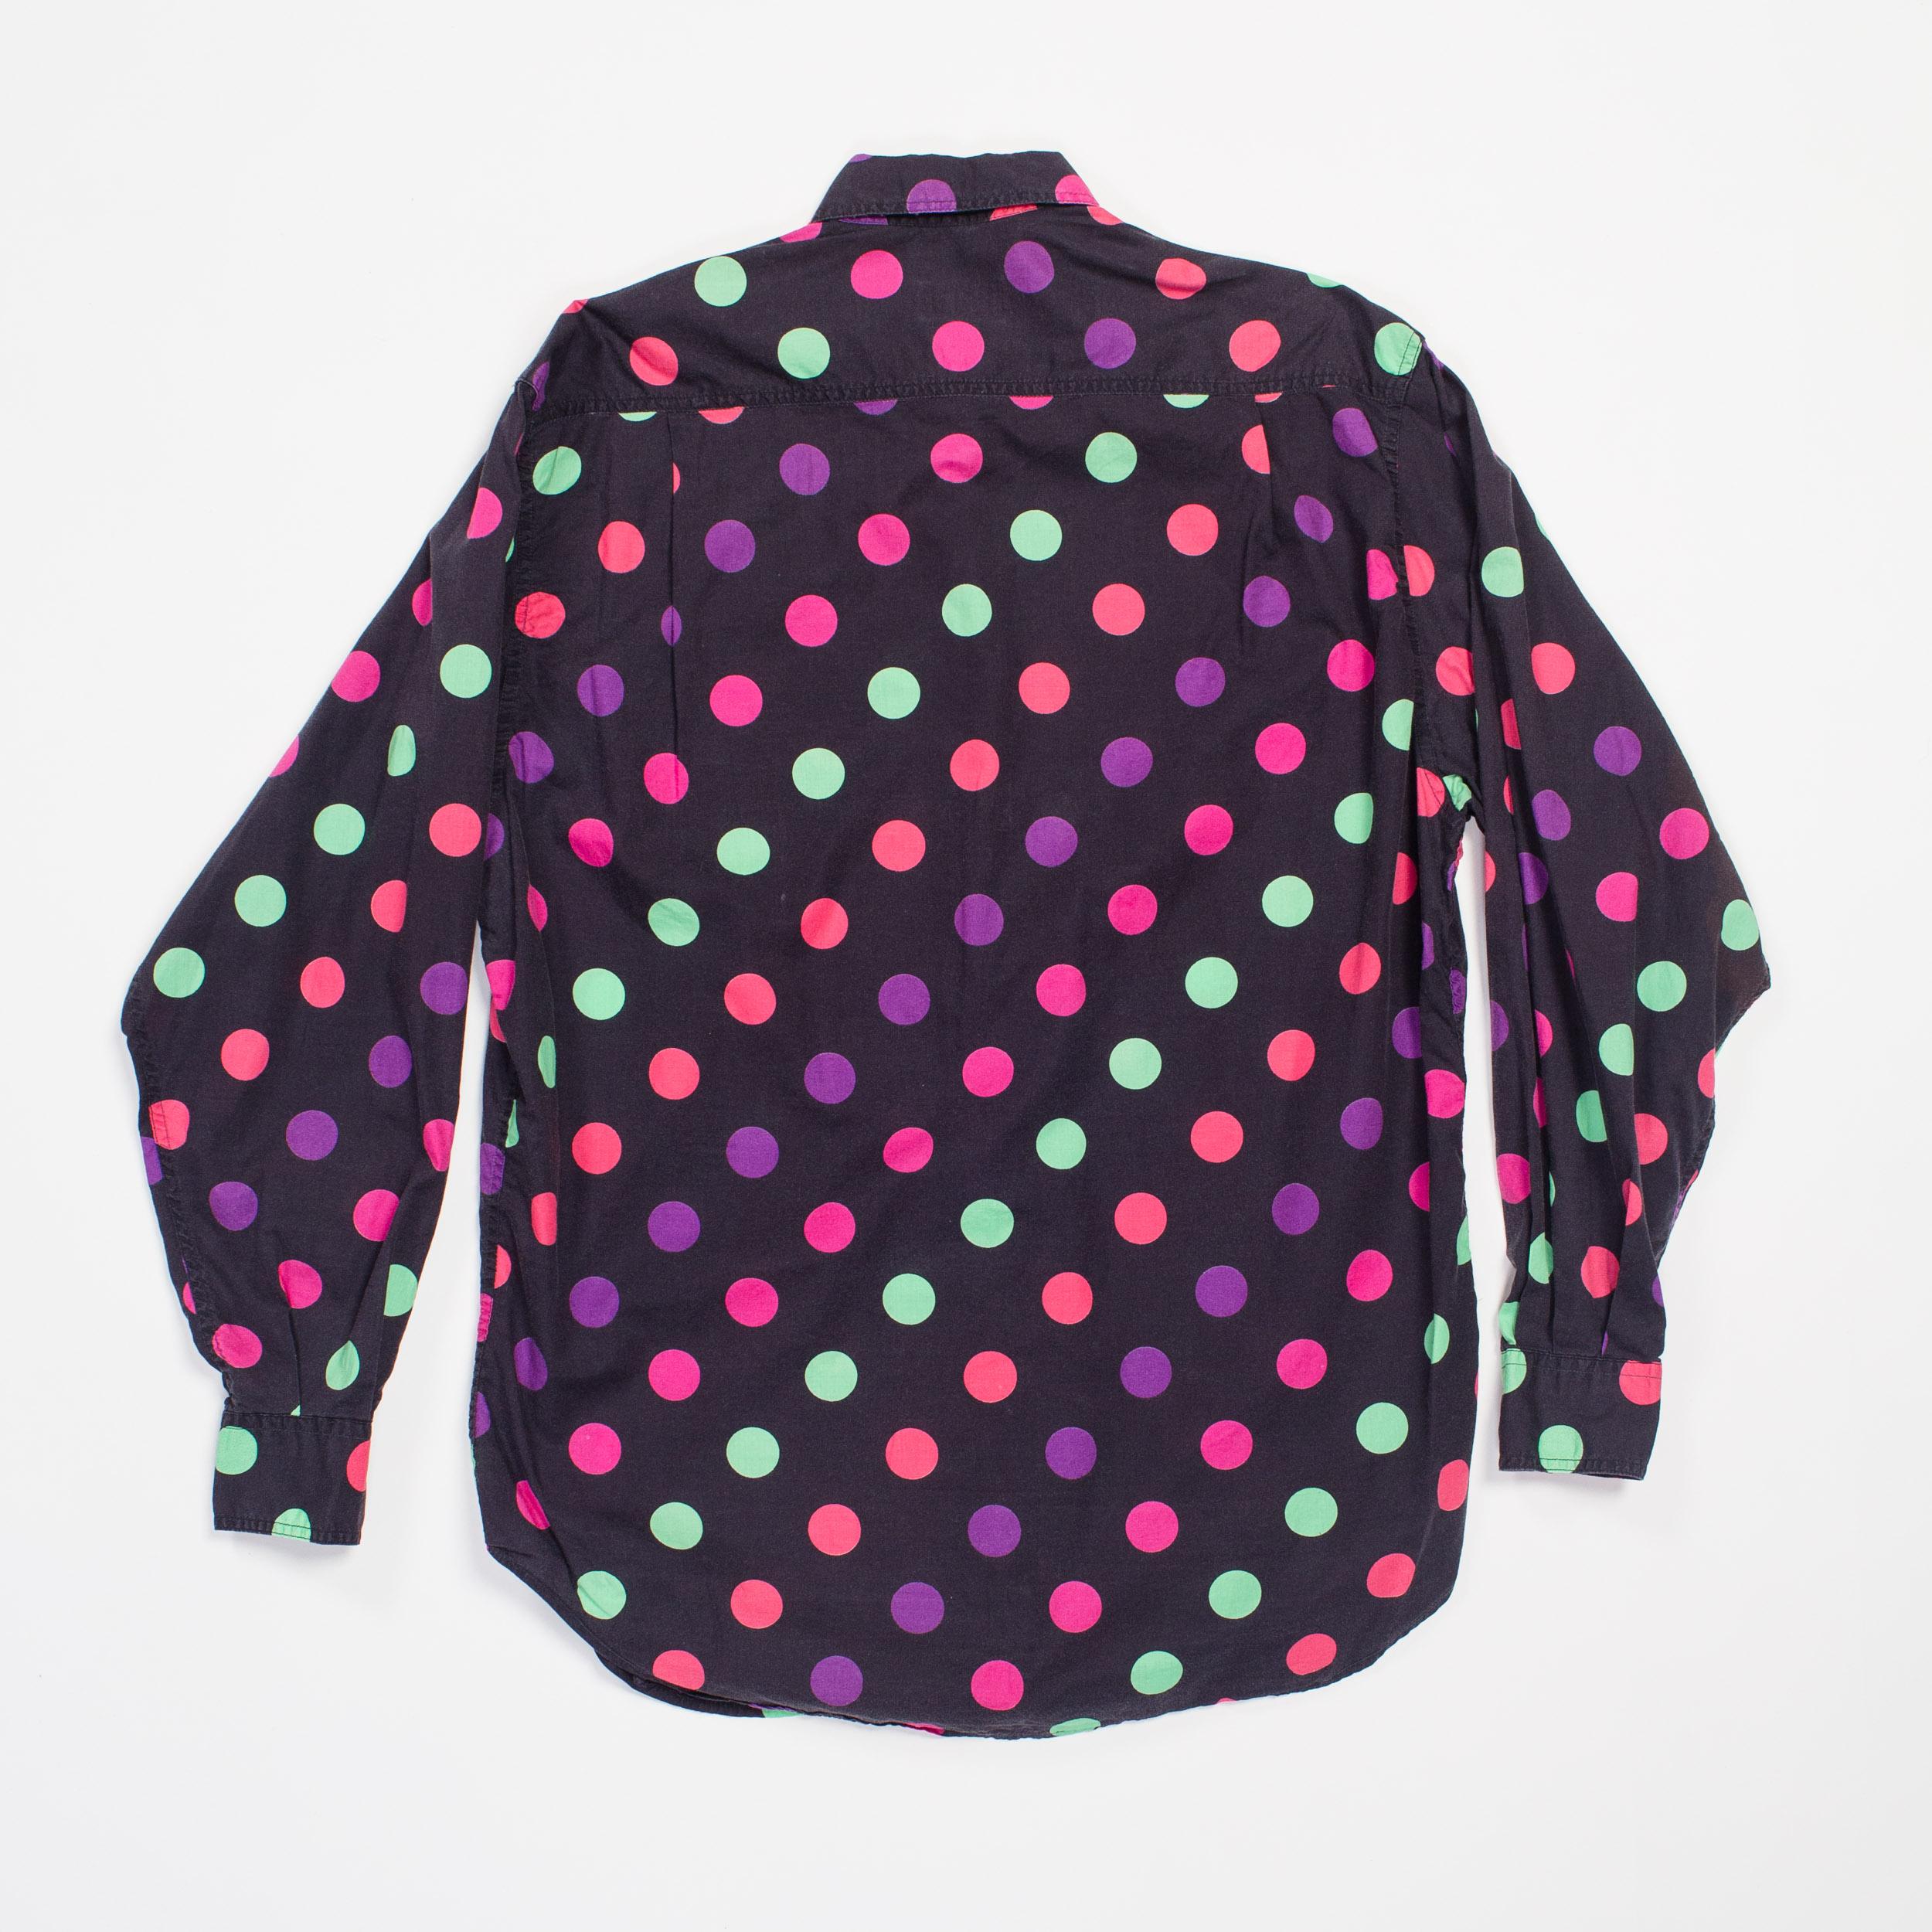 1990S VERSUS BY GIANNI VERSACE Cotton Men's Neon Polka Dot Shirt Sz 44 1